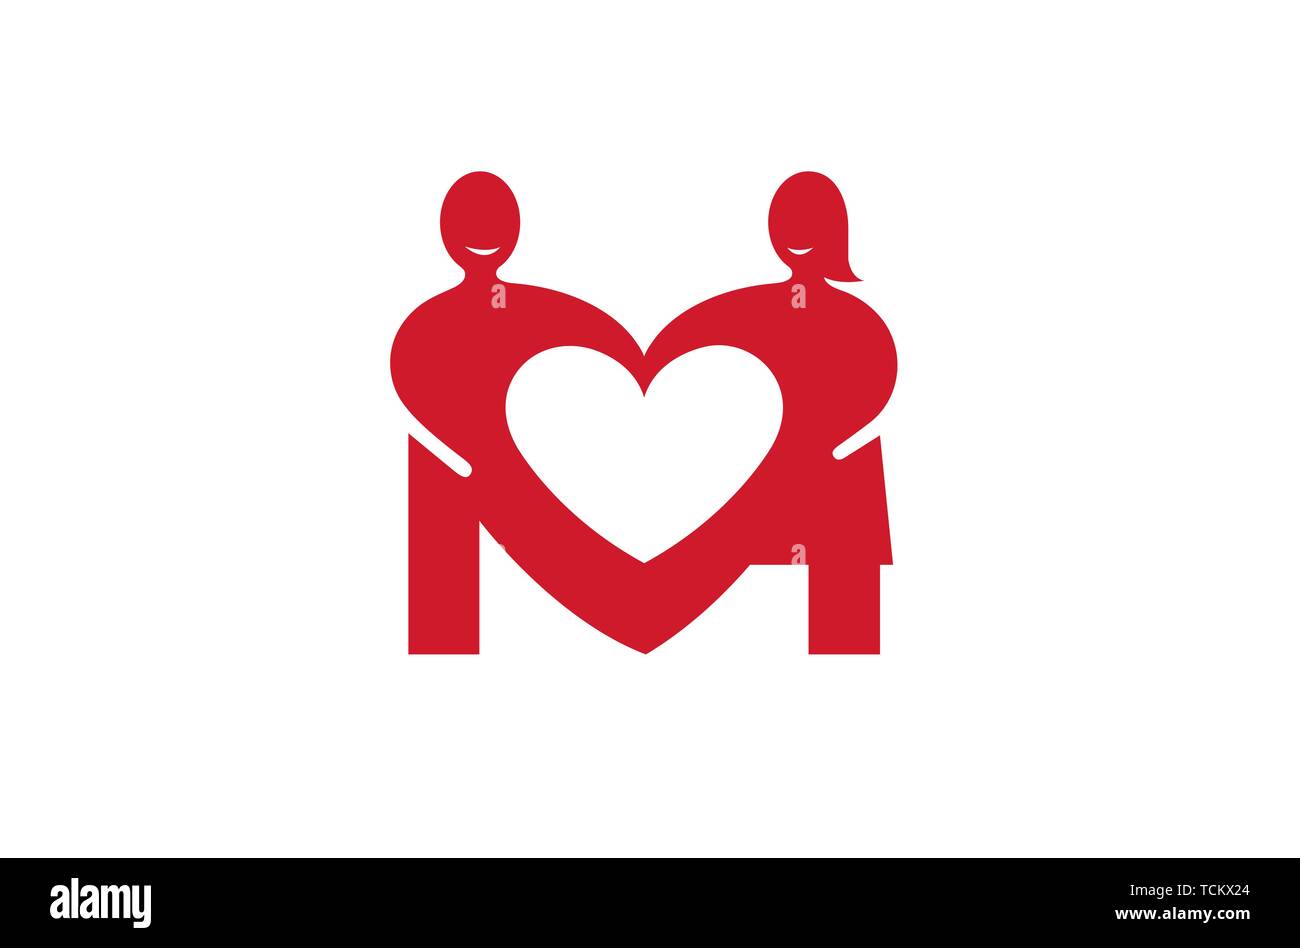 Creative Two Lovers Couple Negative Heart Inside Logo Design Illustration Stock Vector